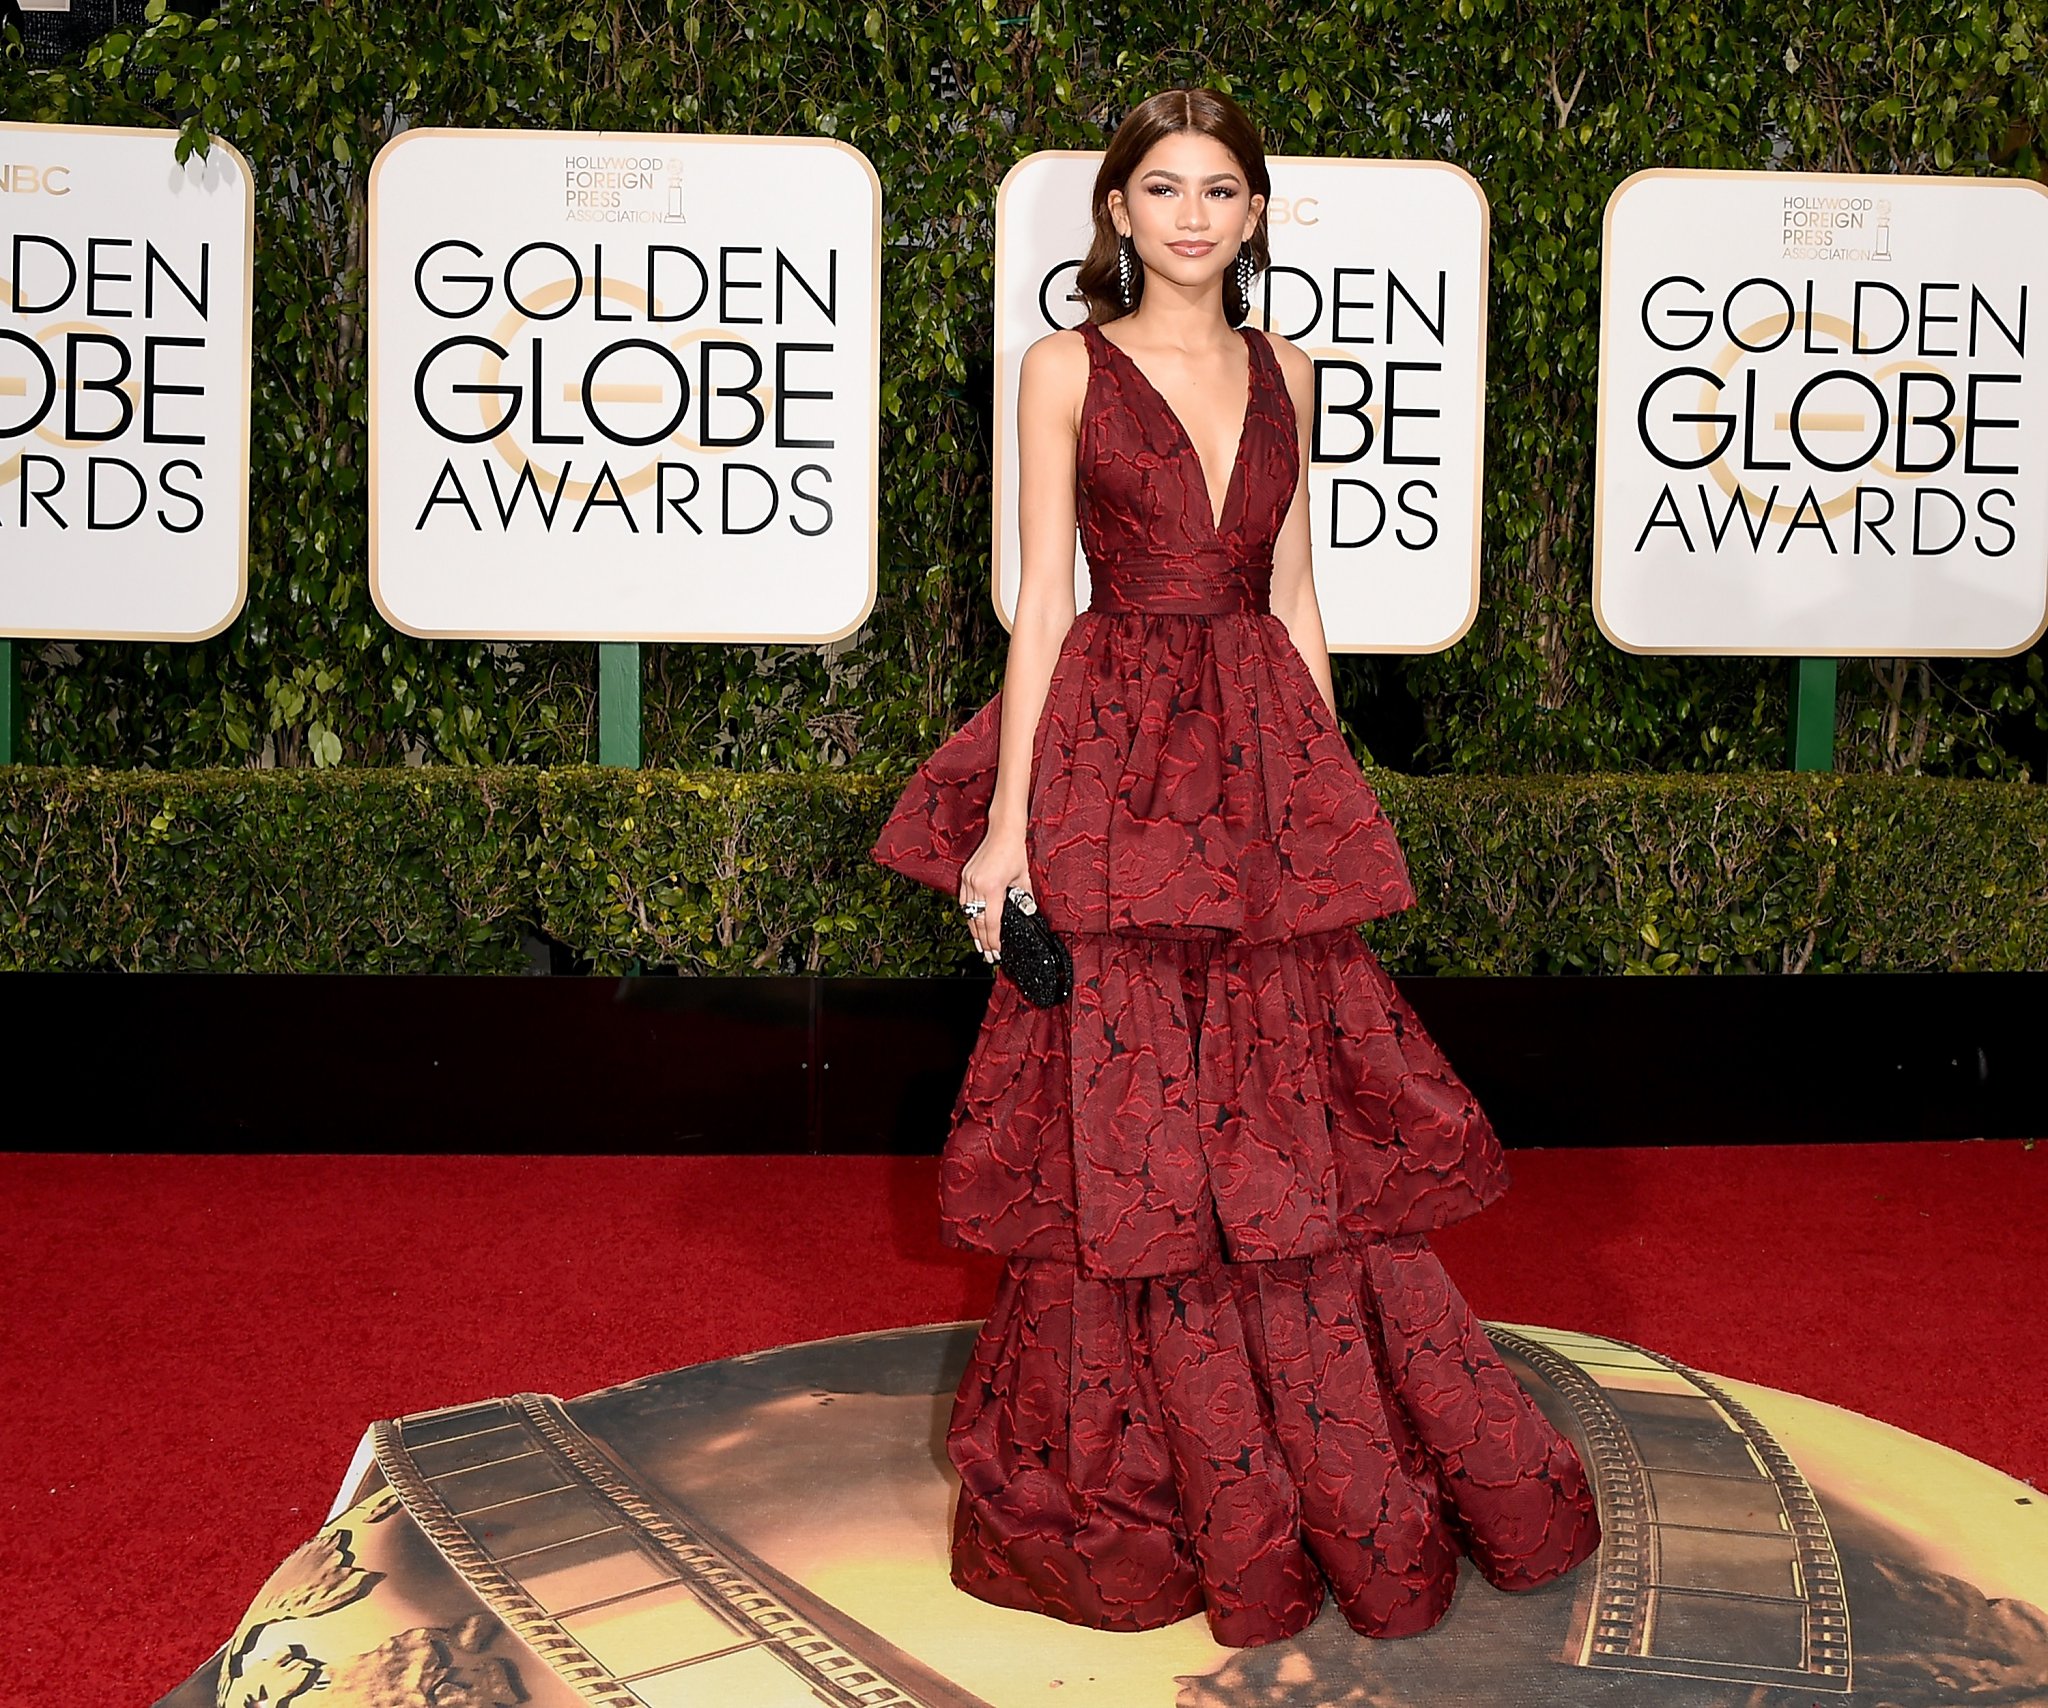 Zendaya Coleman in Golden Globe Awards